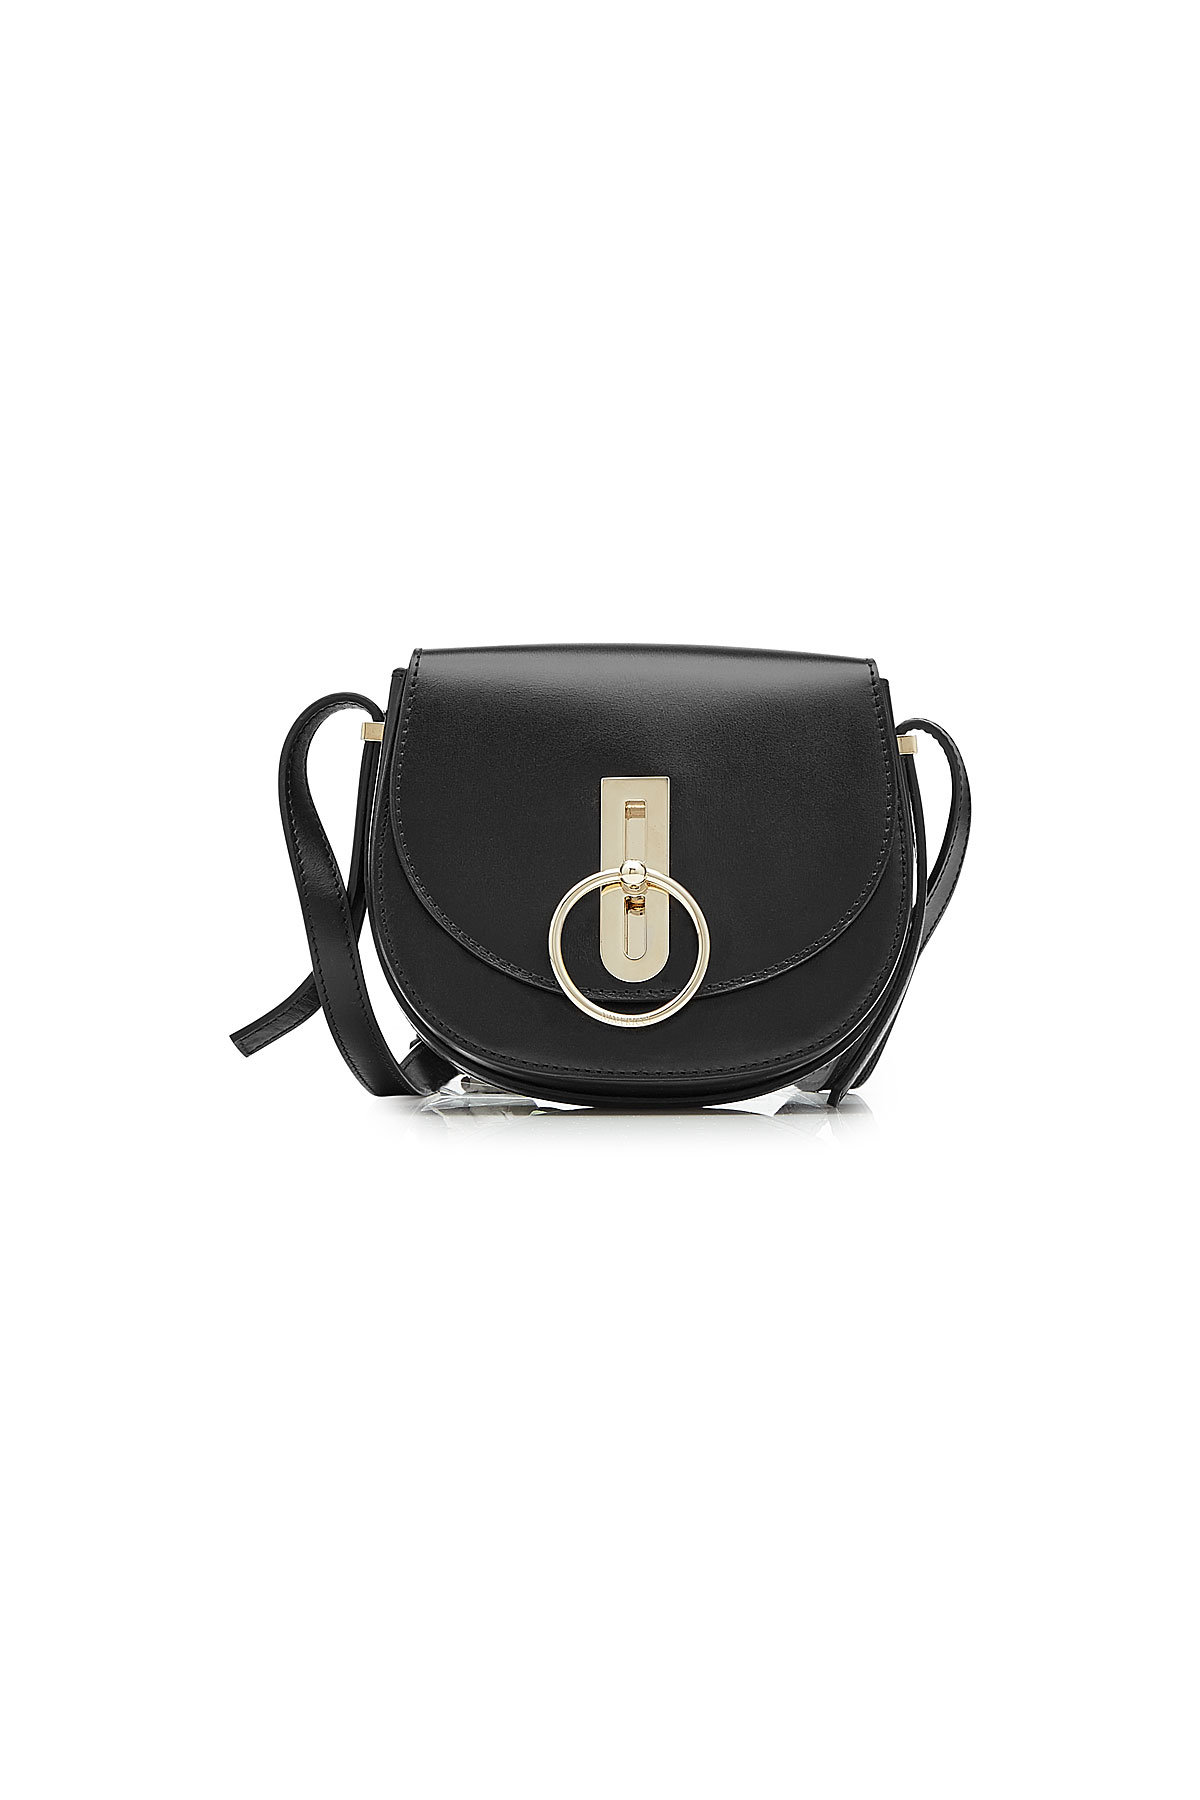 Nina Ricci - Compass Leather Shoulder Bag